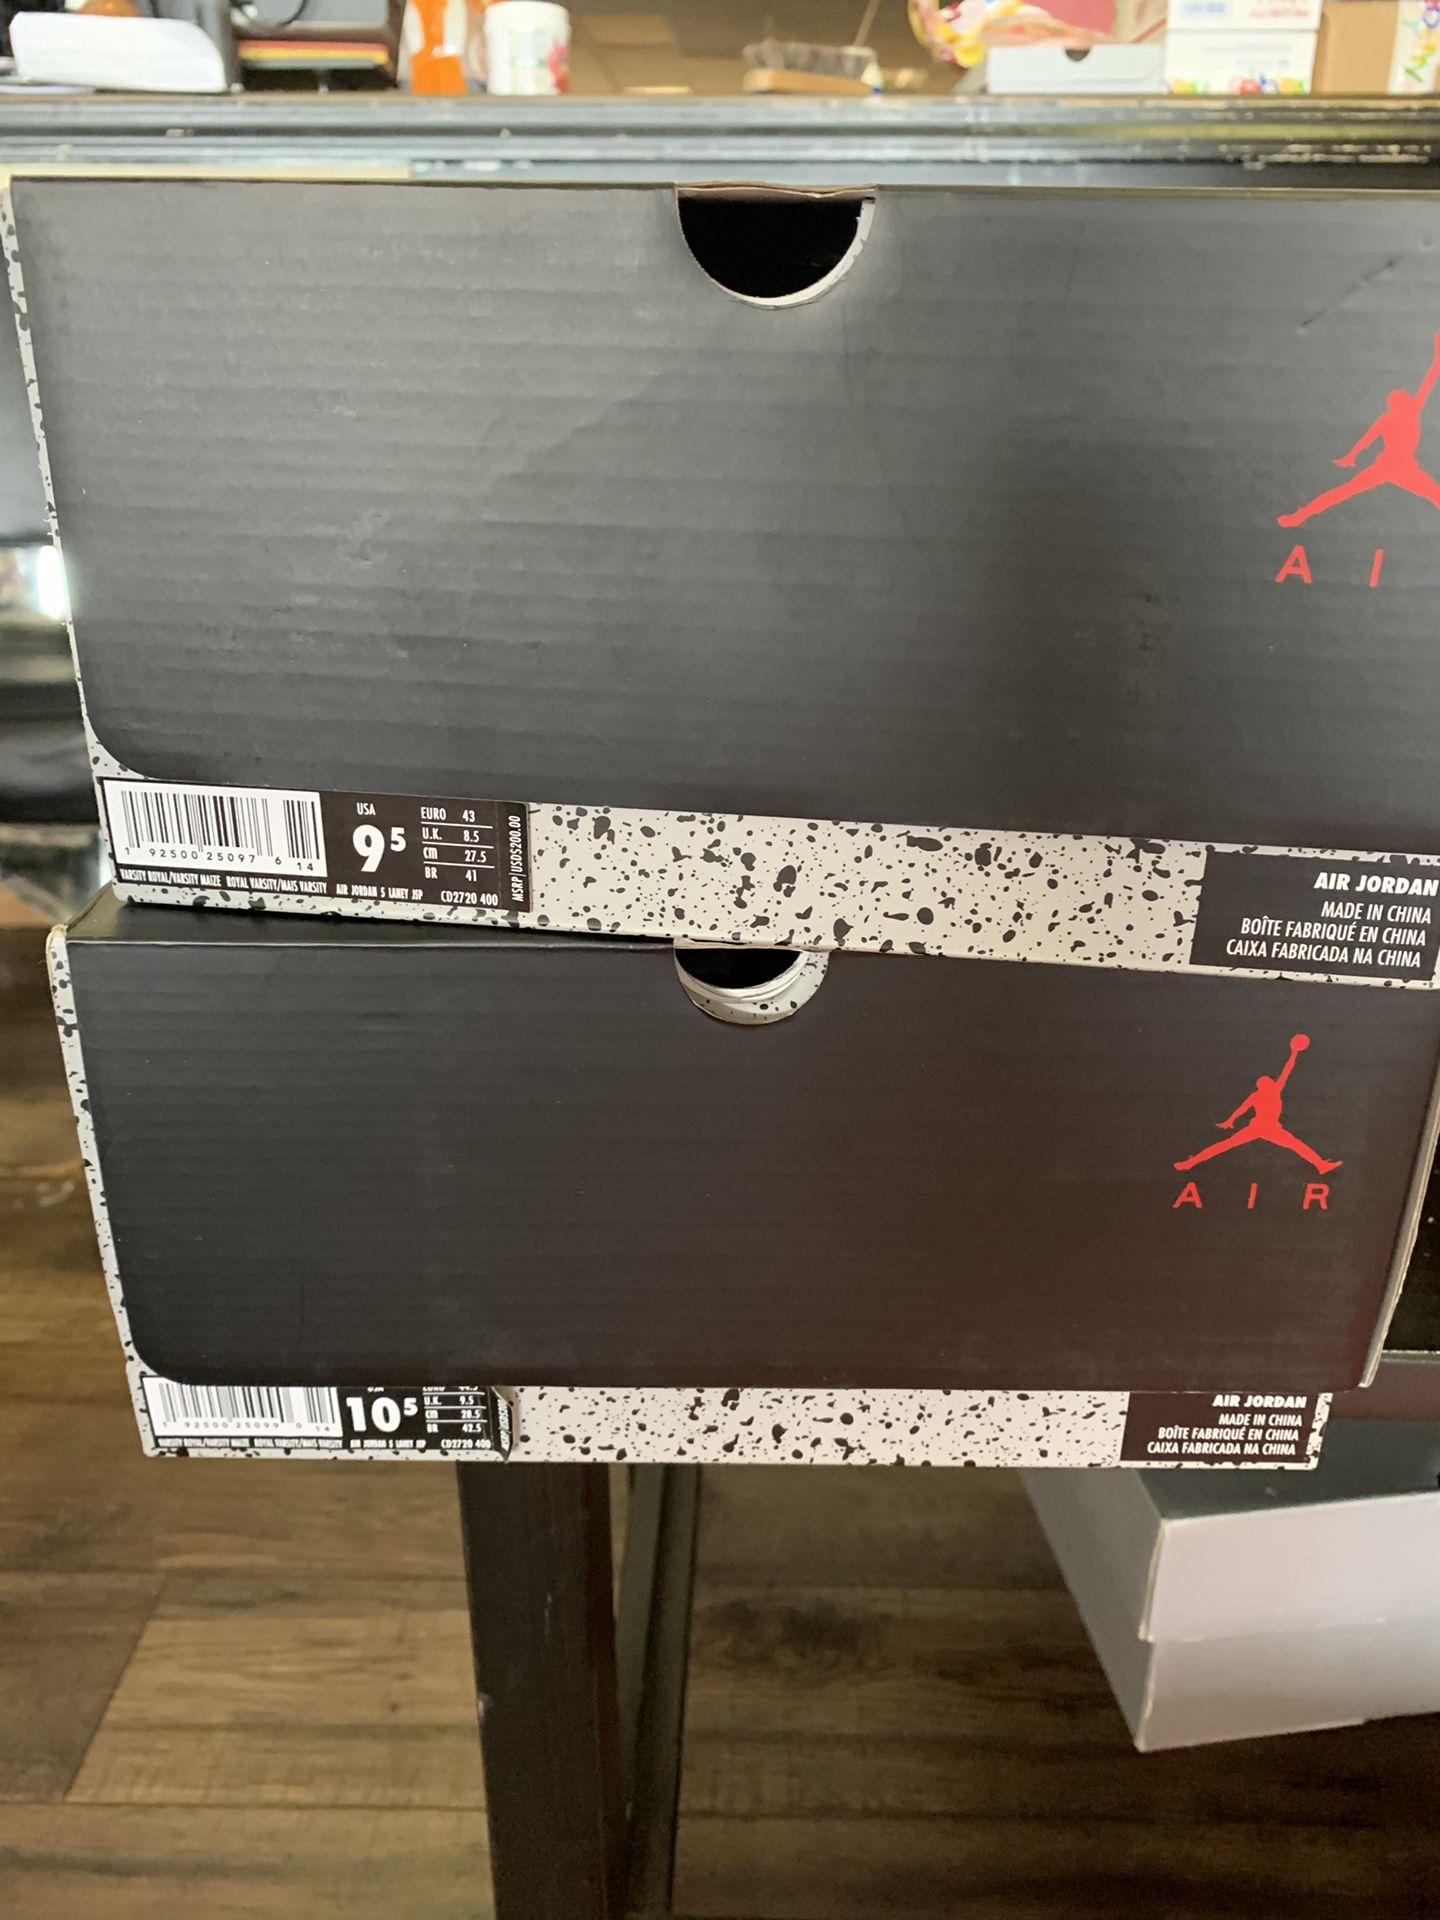 Air Jordan 5 retro blue 10.5 and 9.5